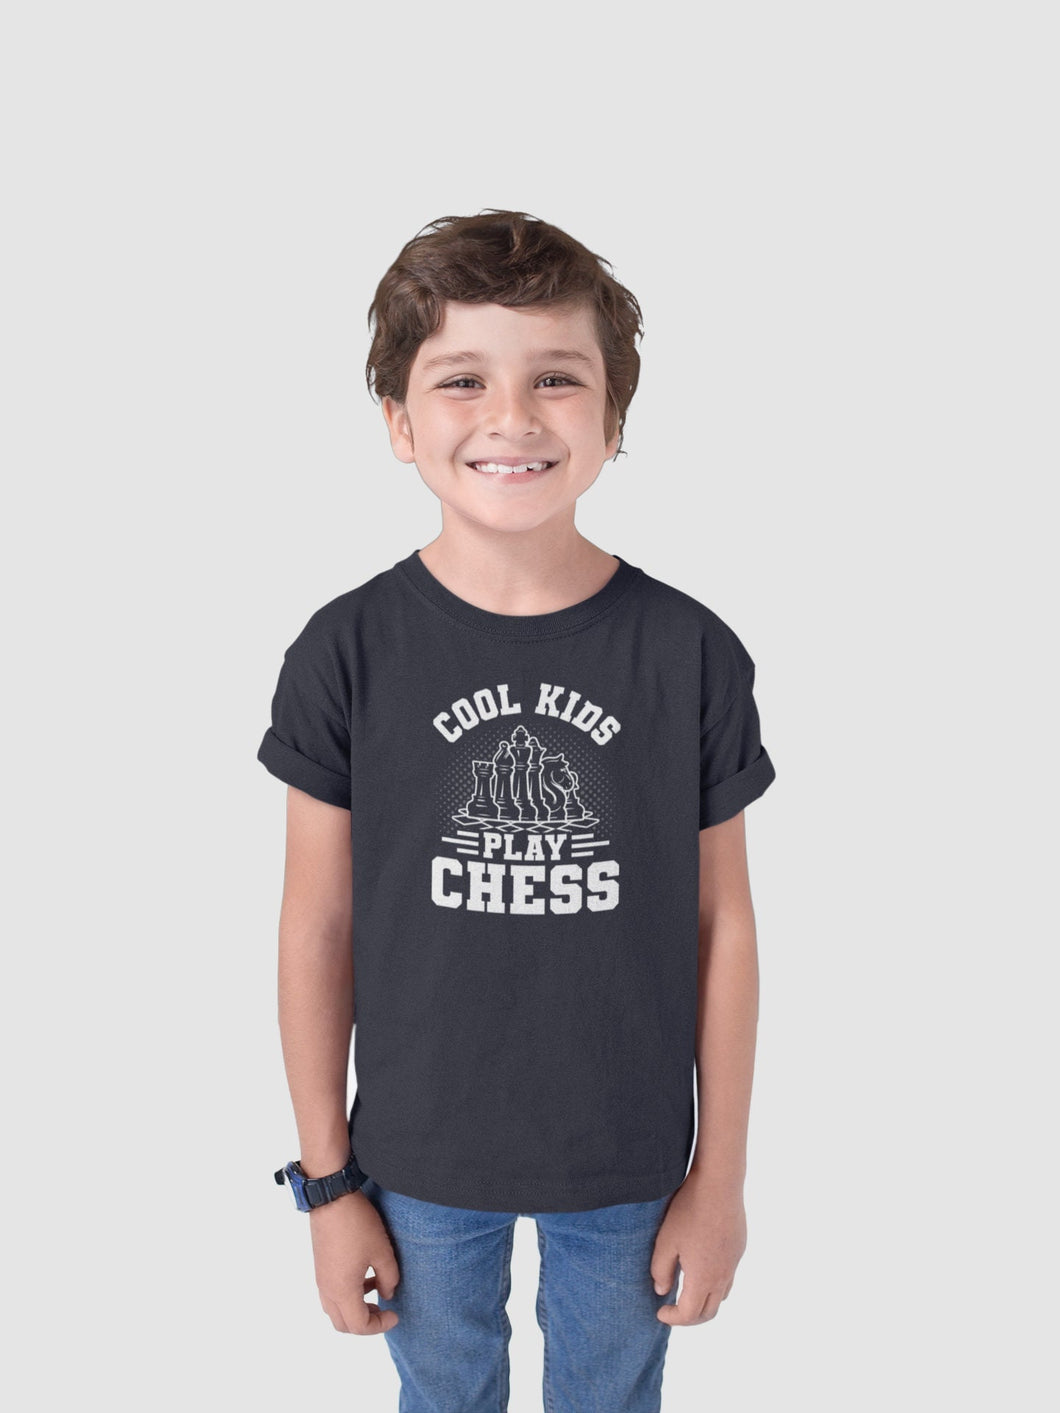 Cool Kids Play Chess Shirt, Funny Kids Chess Shirt, Chess Board Game Shirt, Chess Lover Shirts